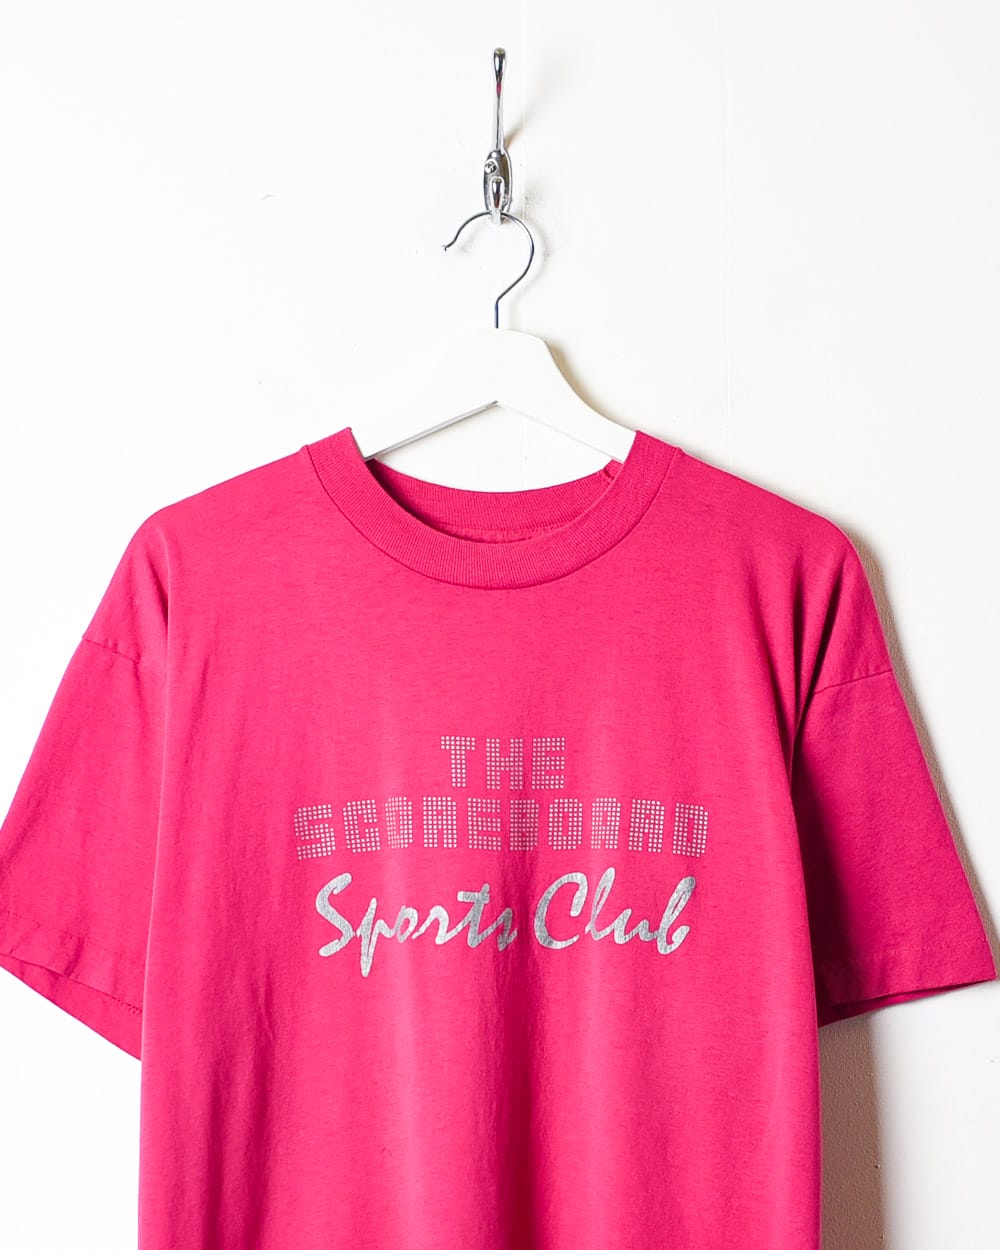 Pink The Scoreboard Sports Club Single Stitch T-Shirt - Medium